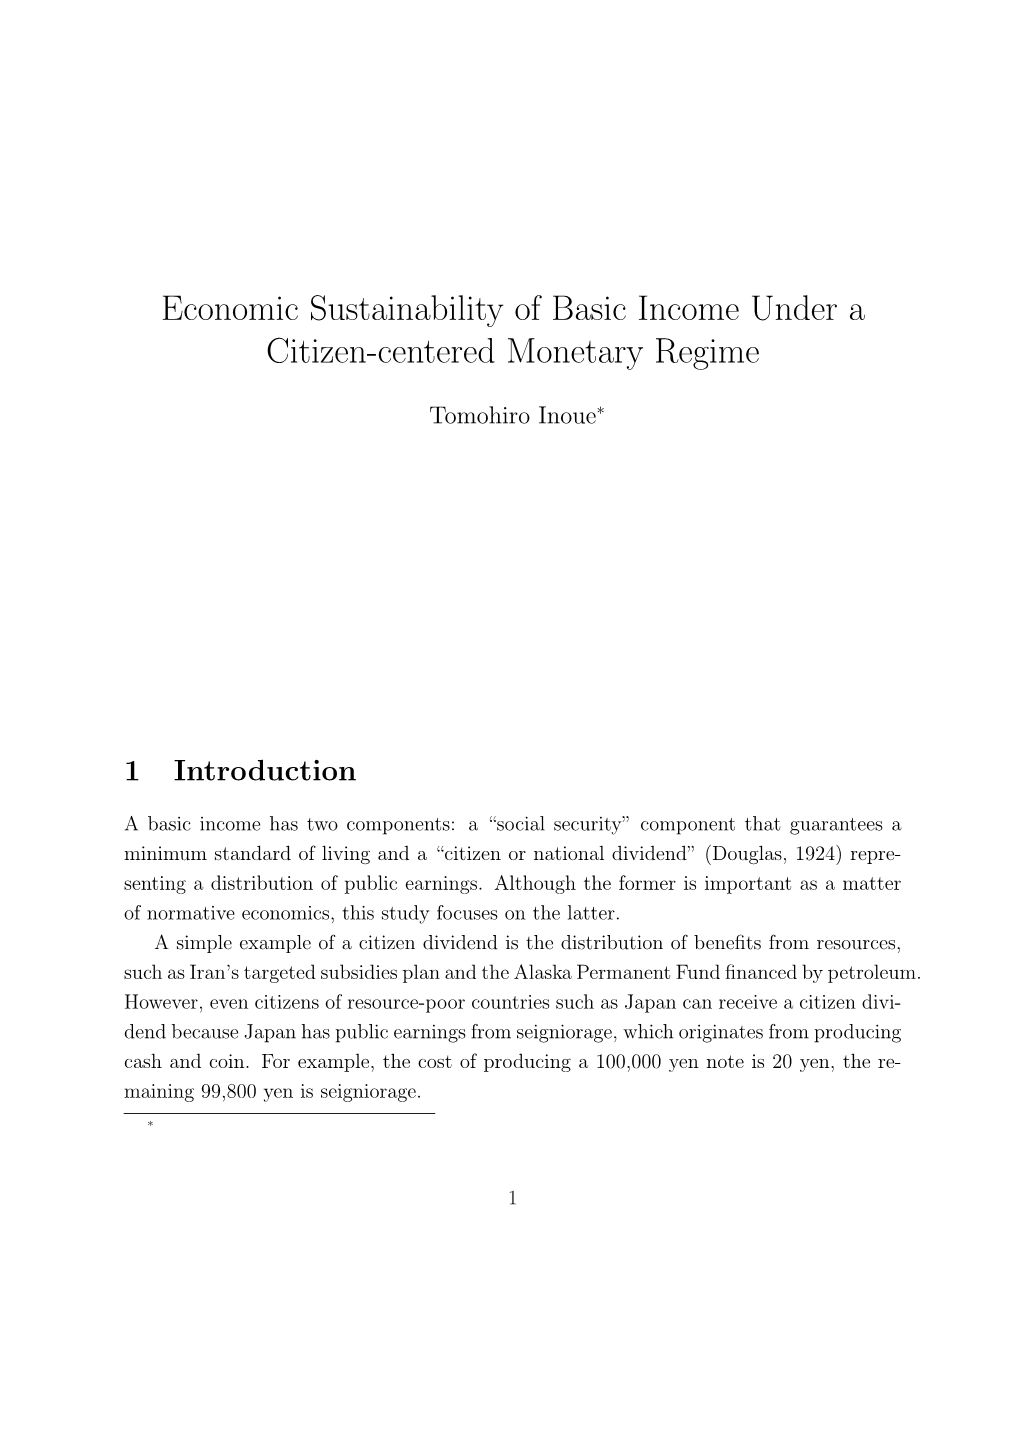 Economic Sustainability of Basic Income Under a Citizen-Centered Monetary Regime